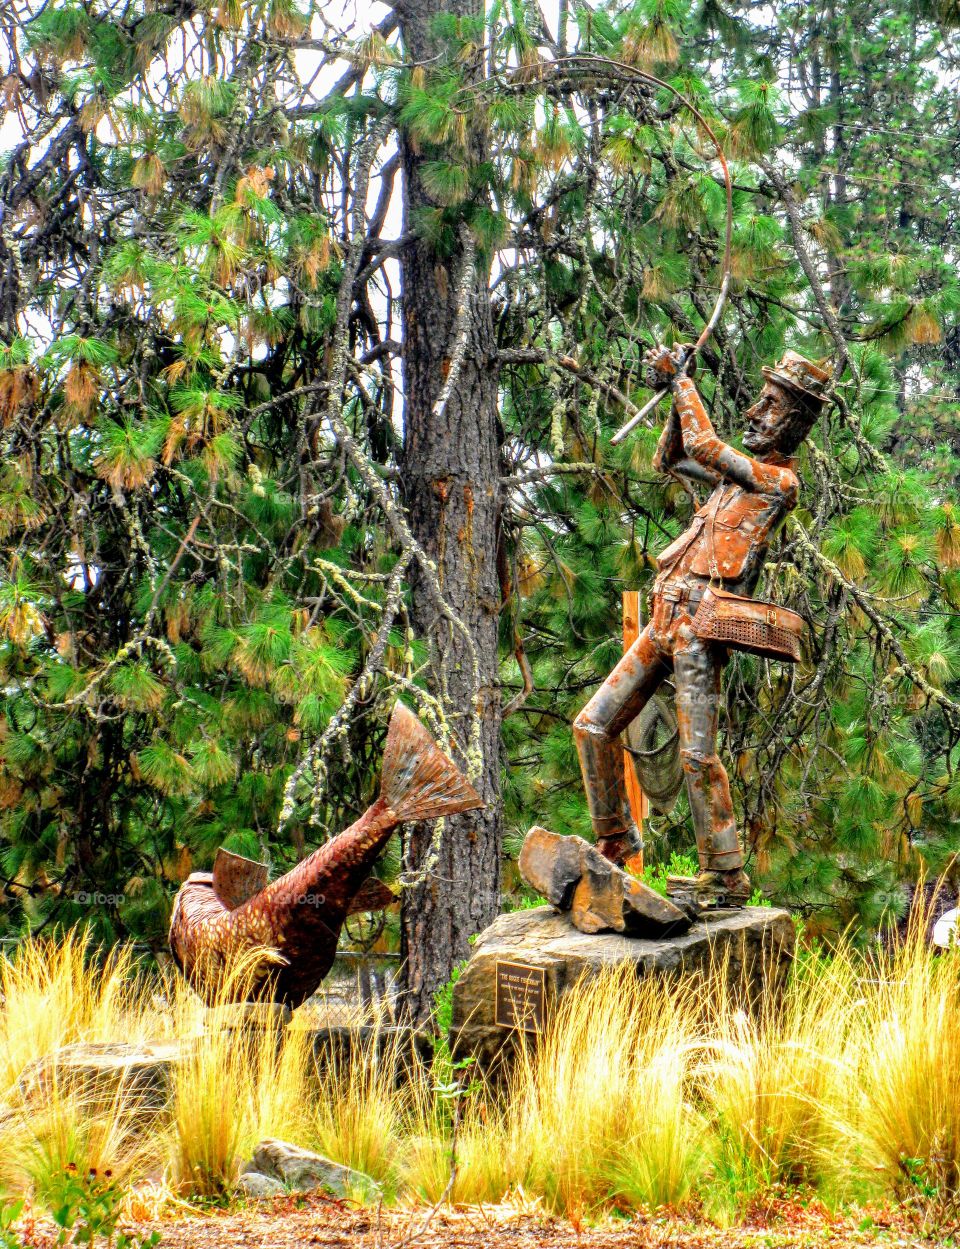 Rusty Fisherman's Statue "Hook Set"